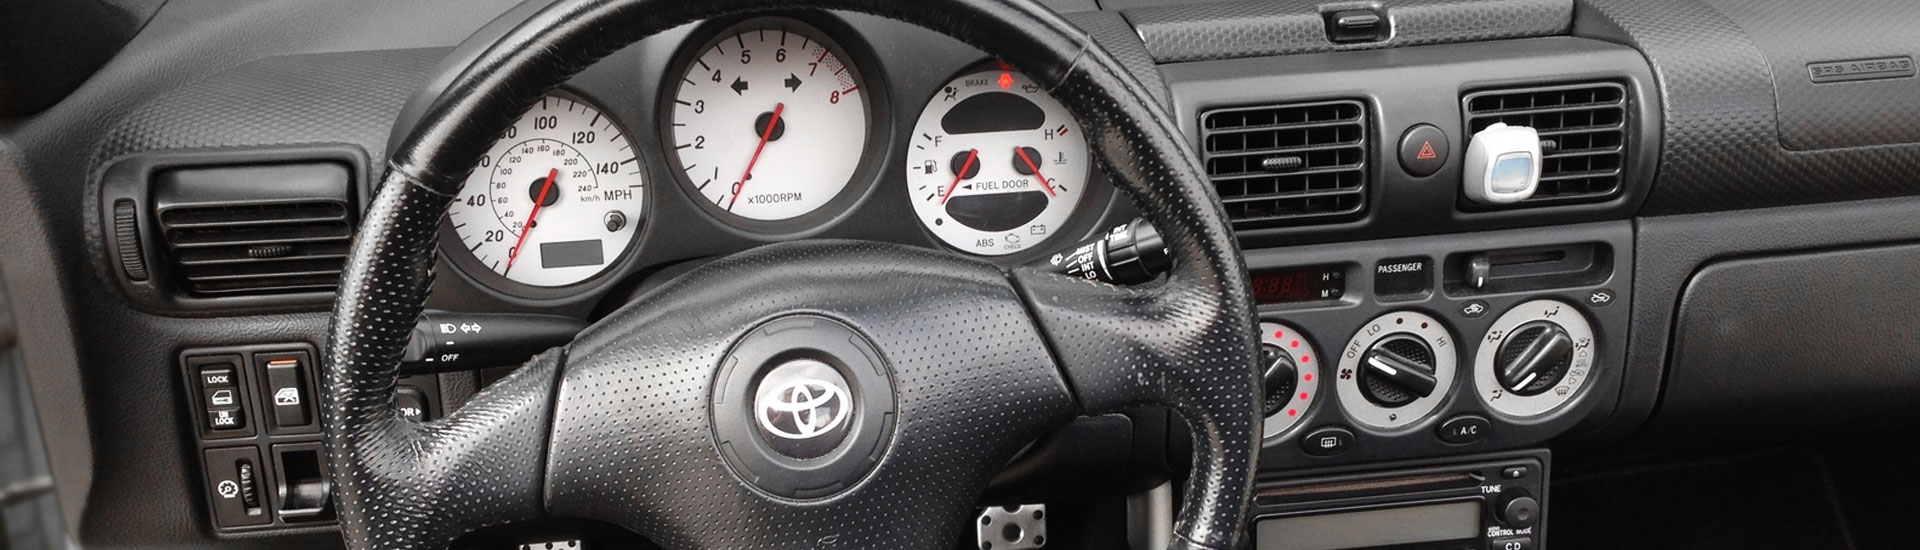 Toyota MR2 Dash Trim Kits